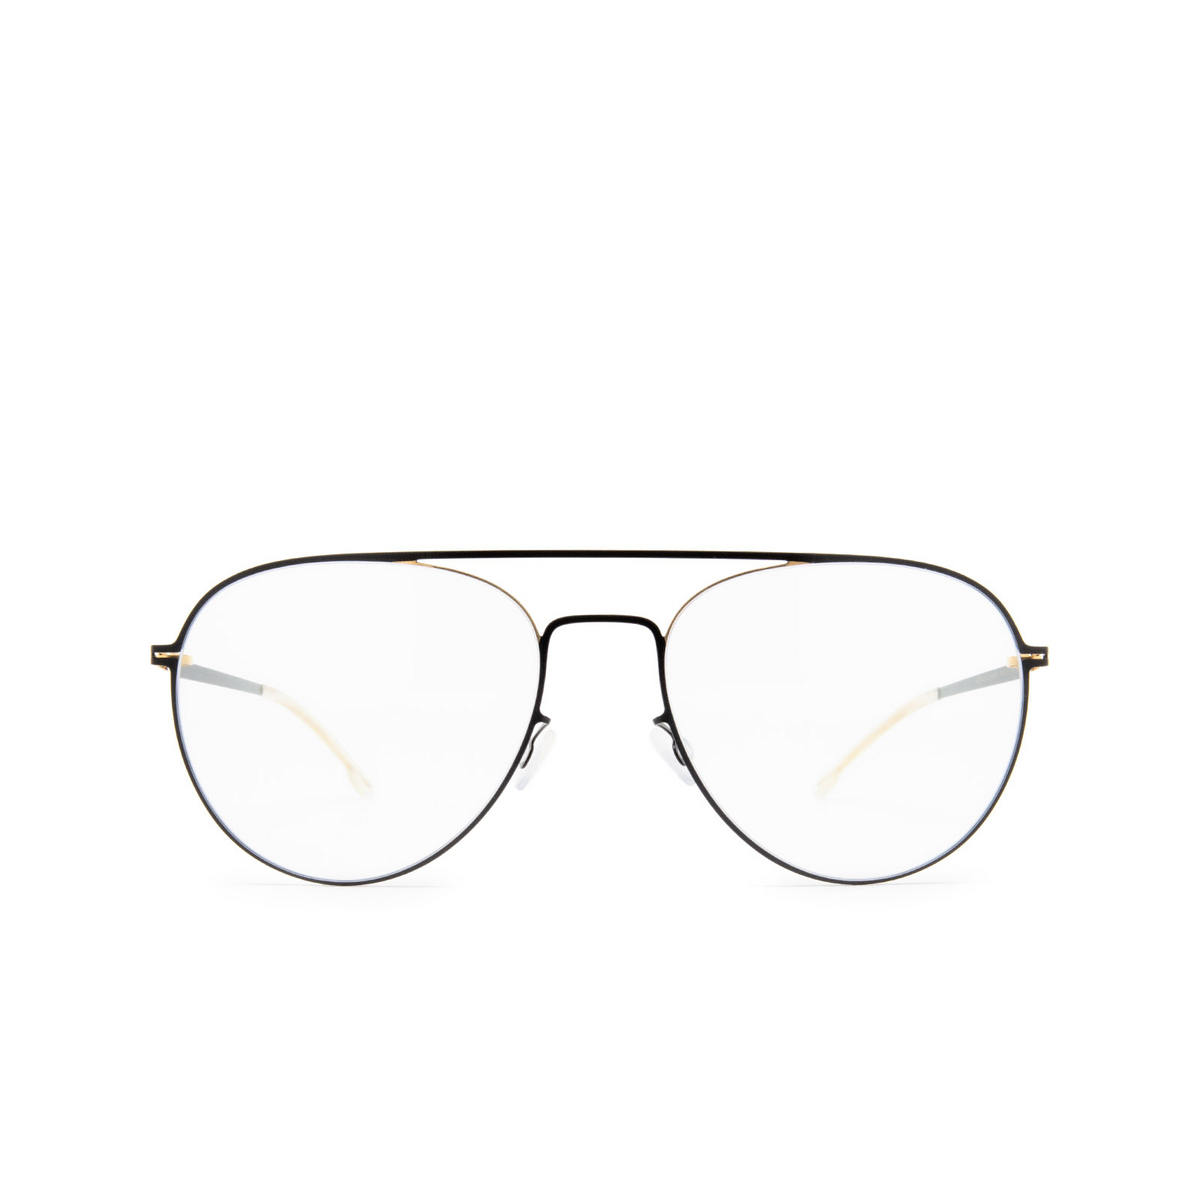 Mykita EERO Eyeglasses 167 Gold/Jet Black - front view